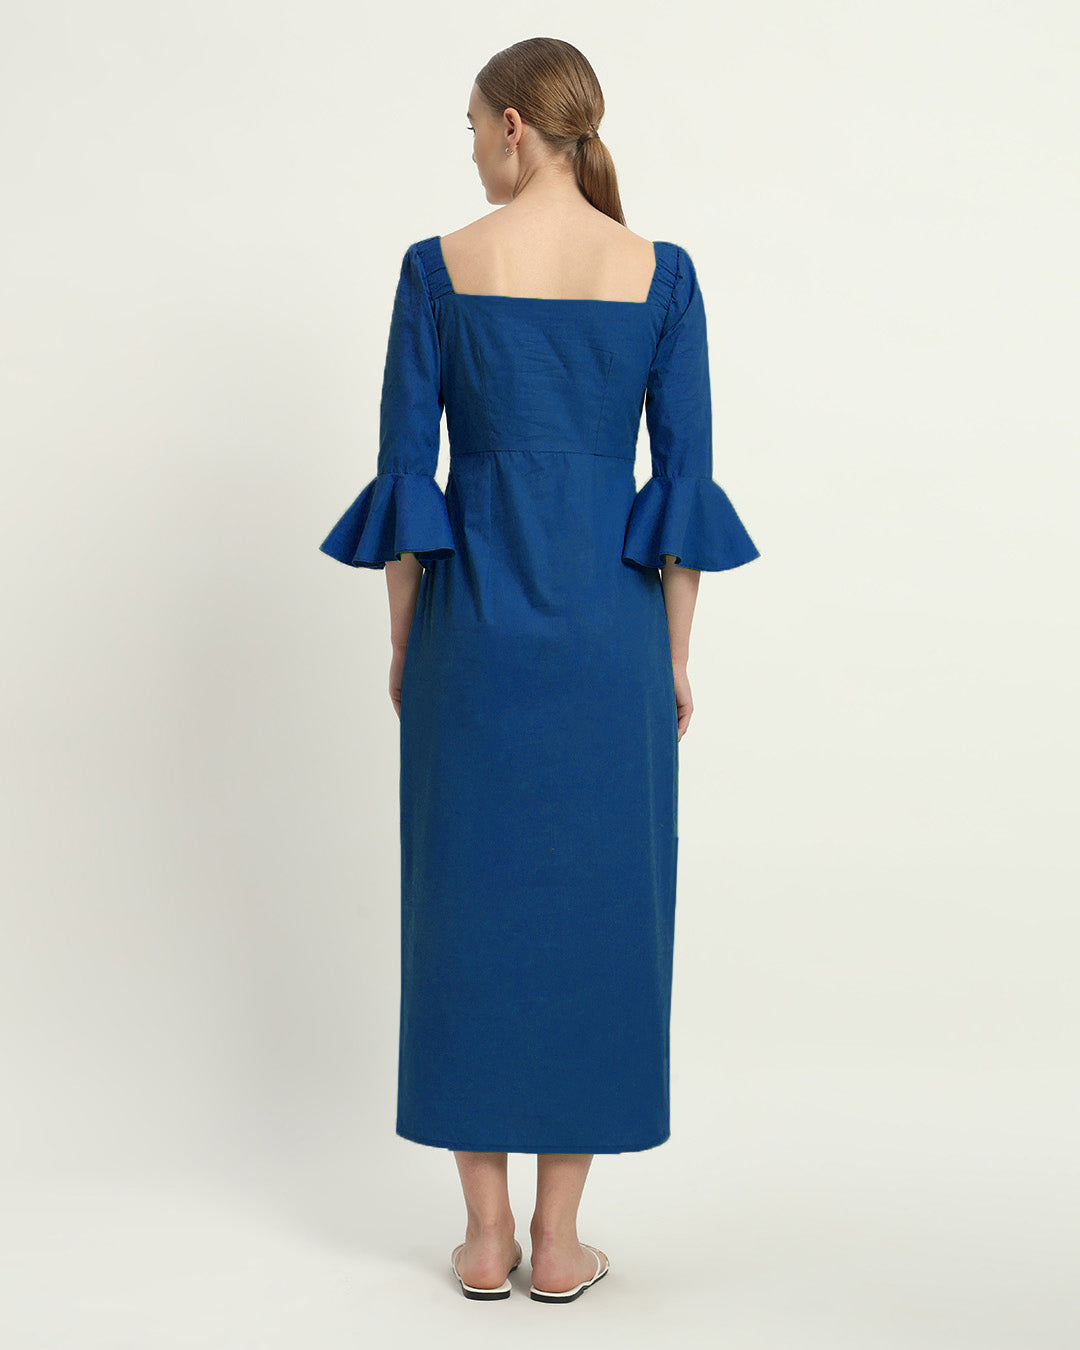 The Cobalt Rosendale Cotton Dress